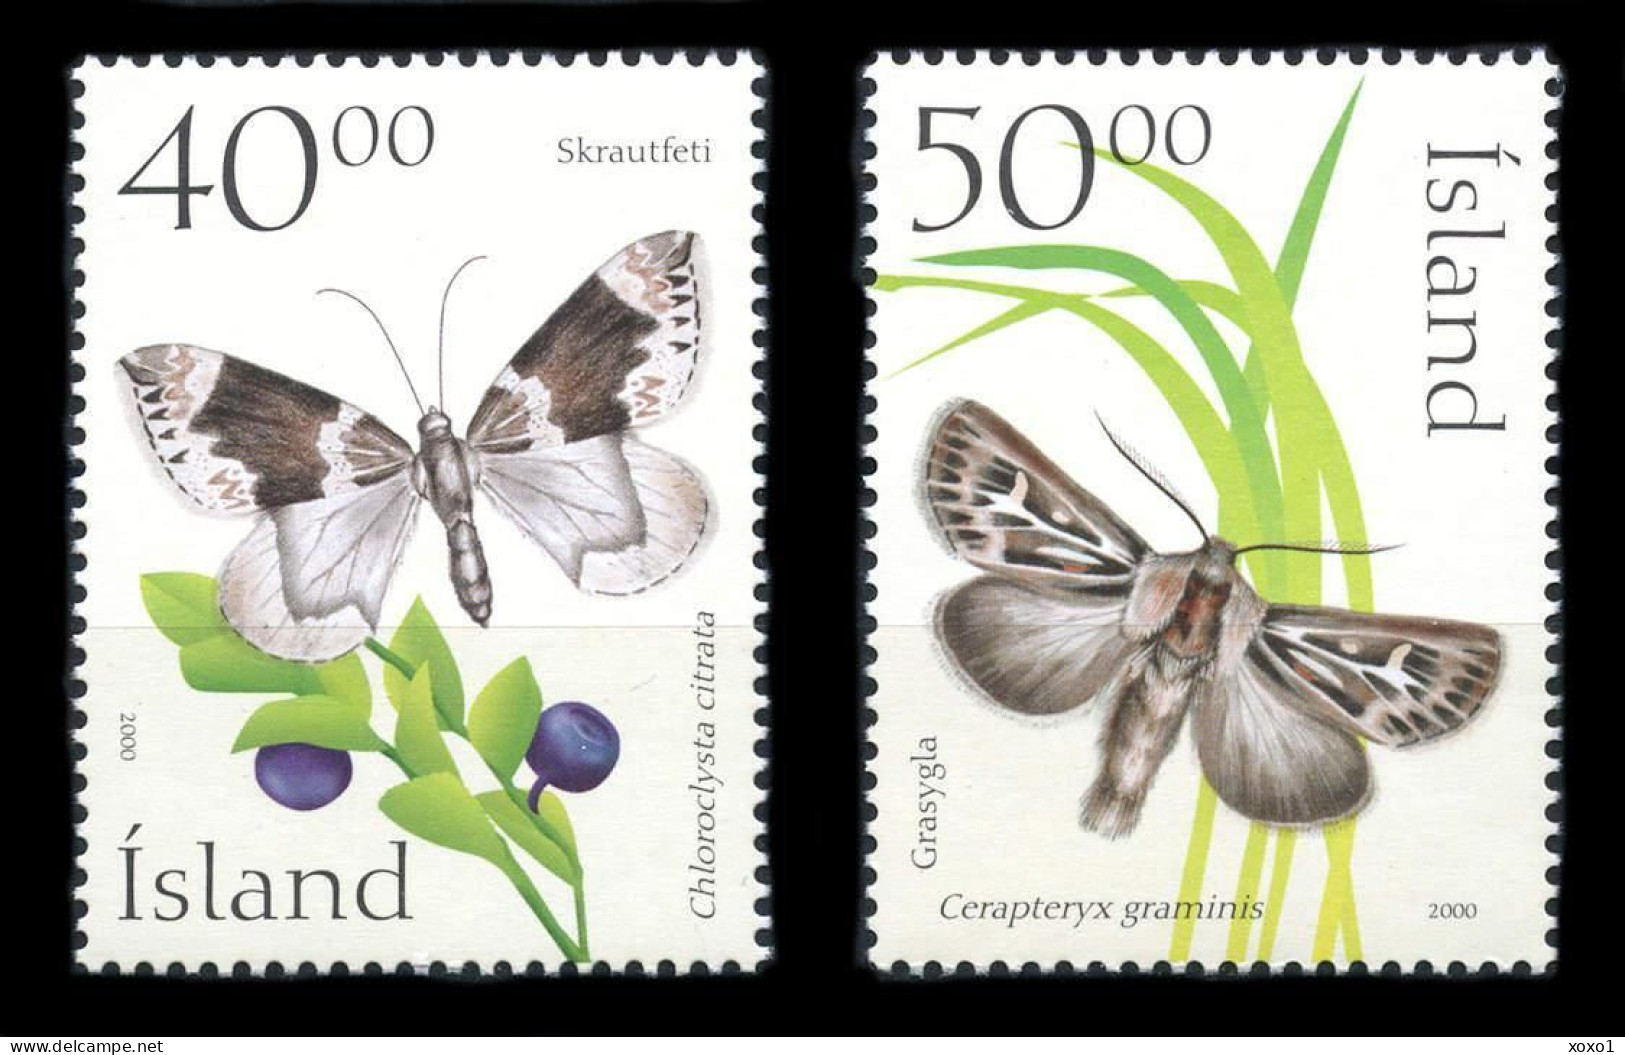 Iceland 2000 MiNr. 963 - 964 Island  Insects, Butterflies  2v  MNH**  3.00 € - Butterflies